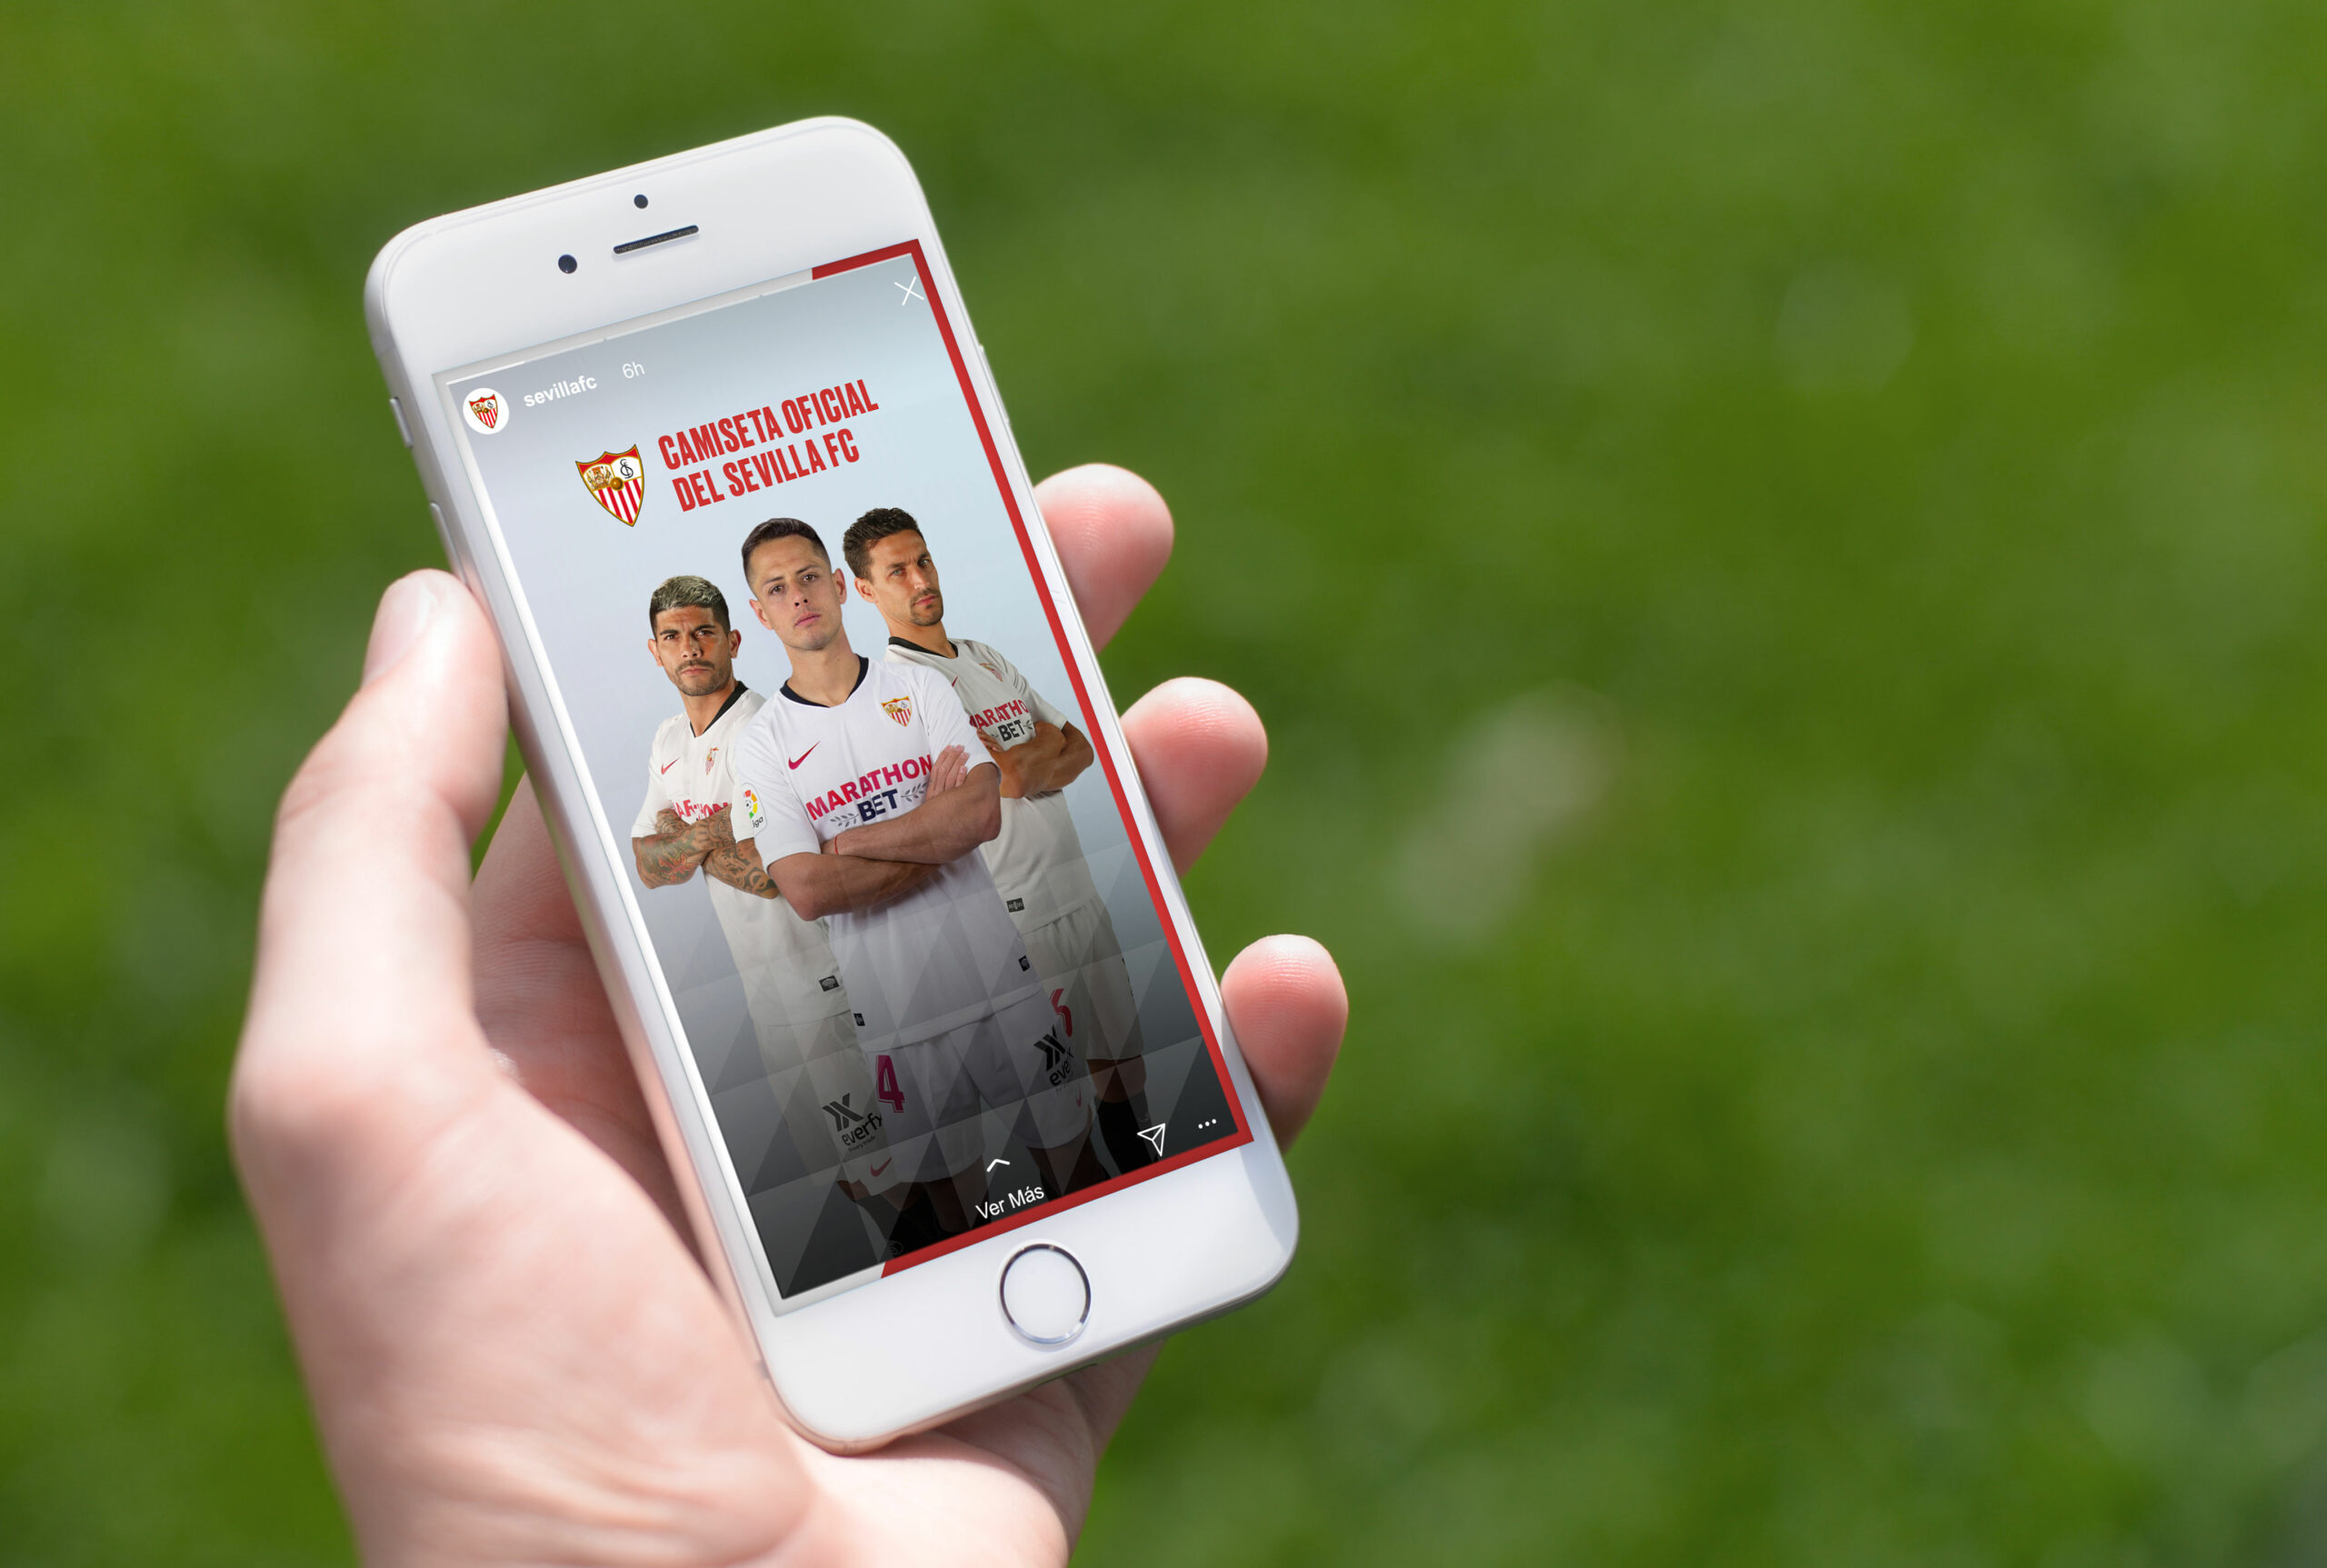 Sevilla FC - Creación de para redes sociales - Feedb<ck